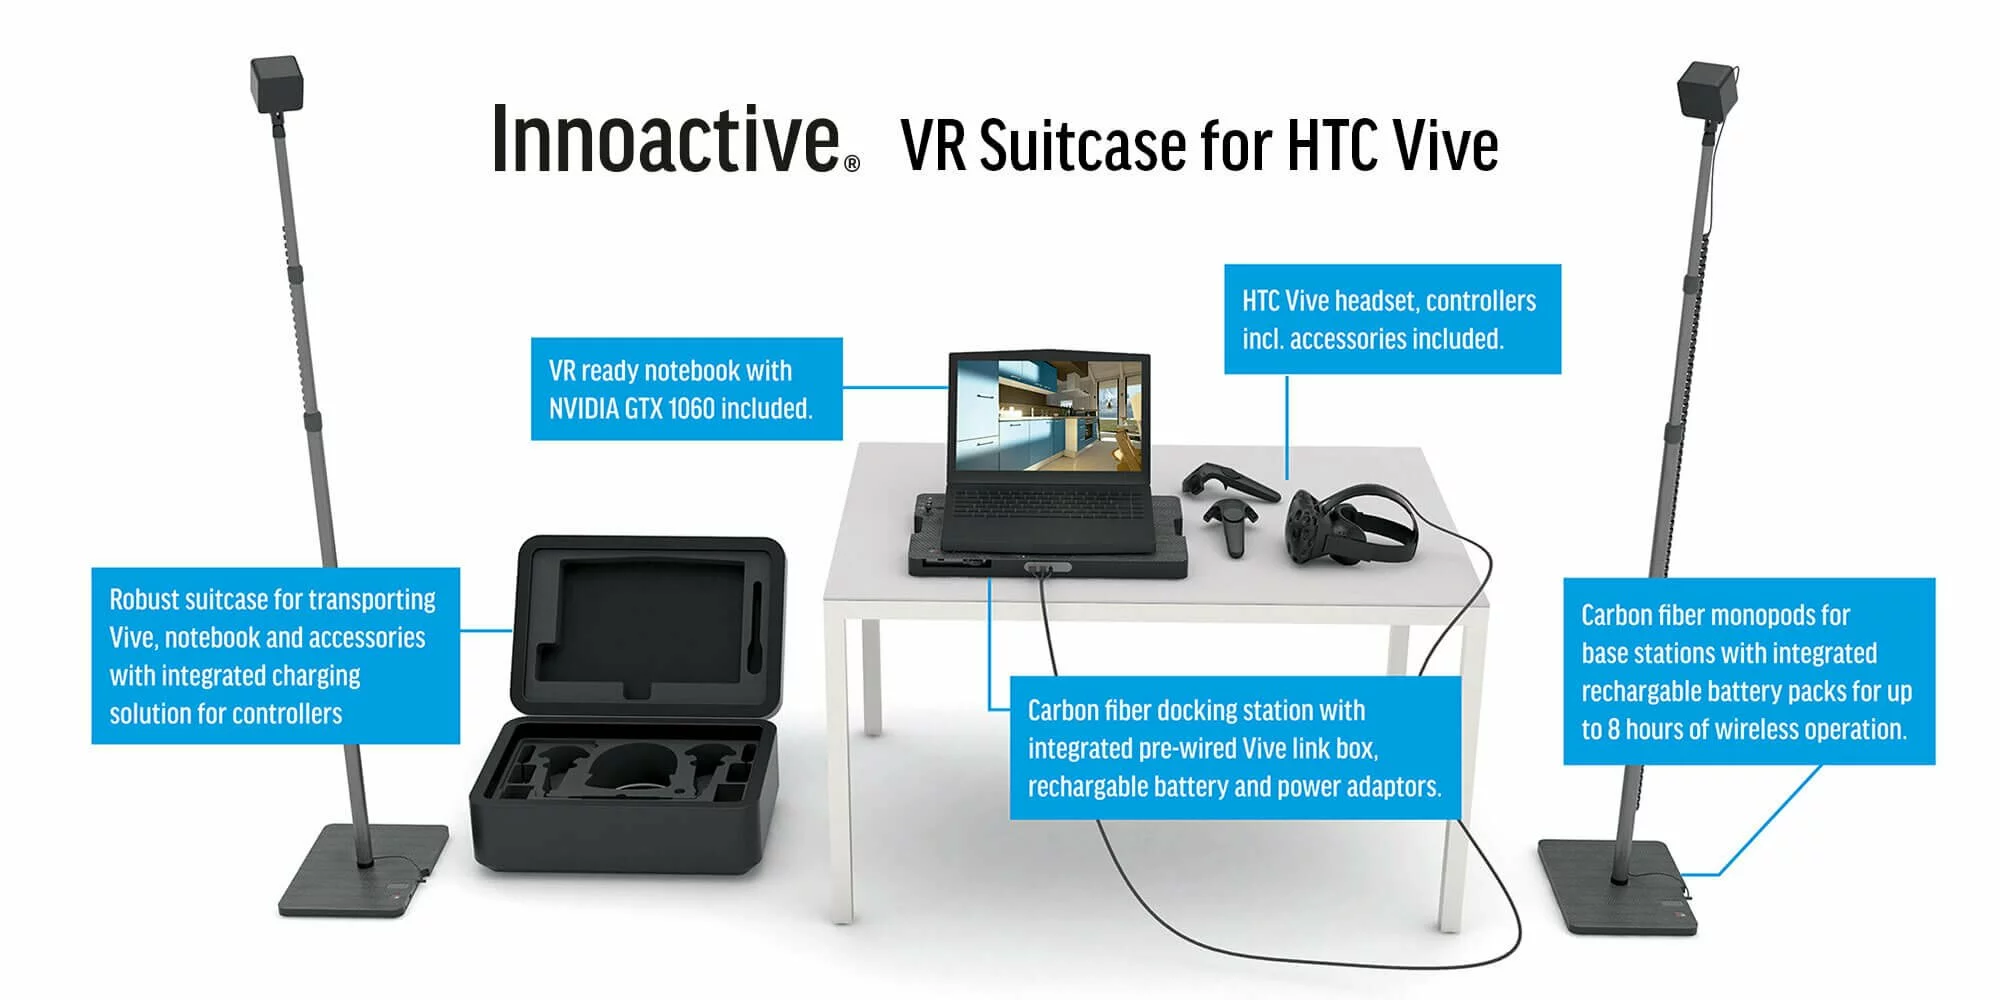 Innovative VR Suitcase